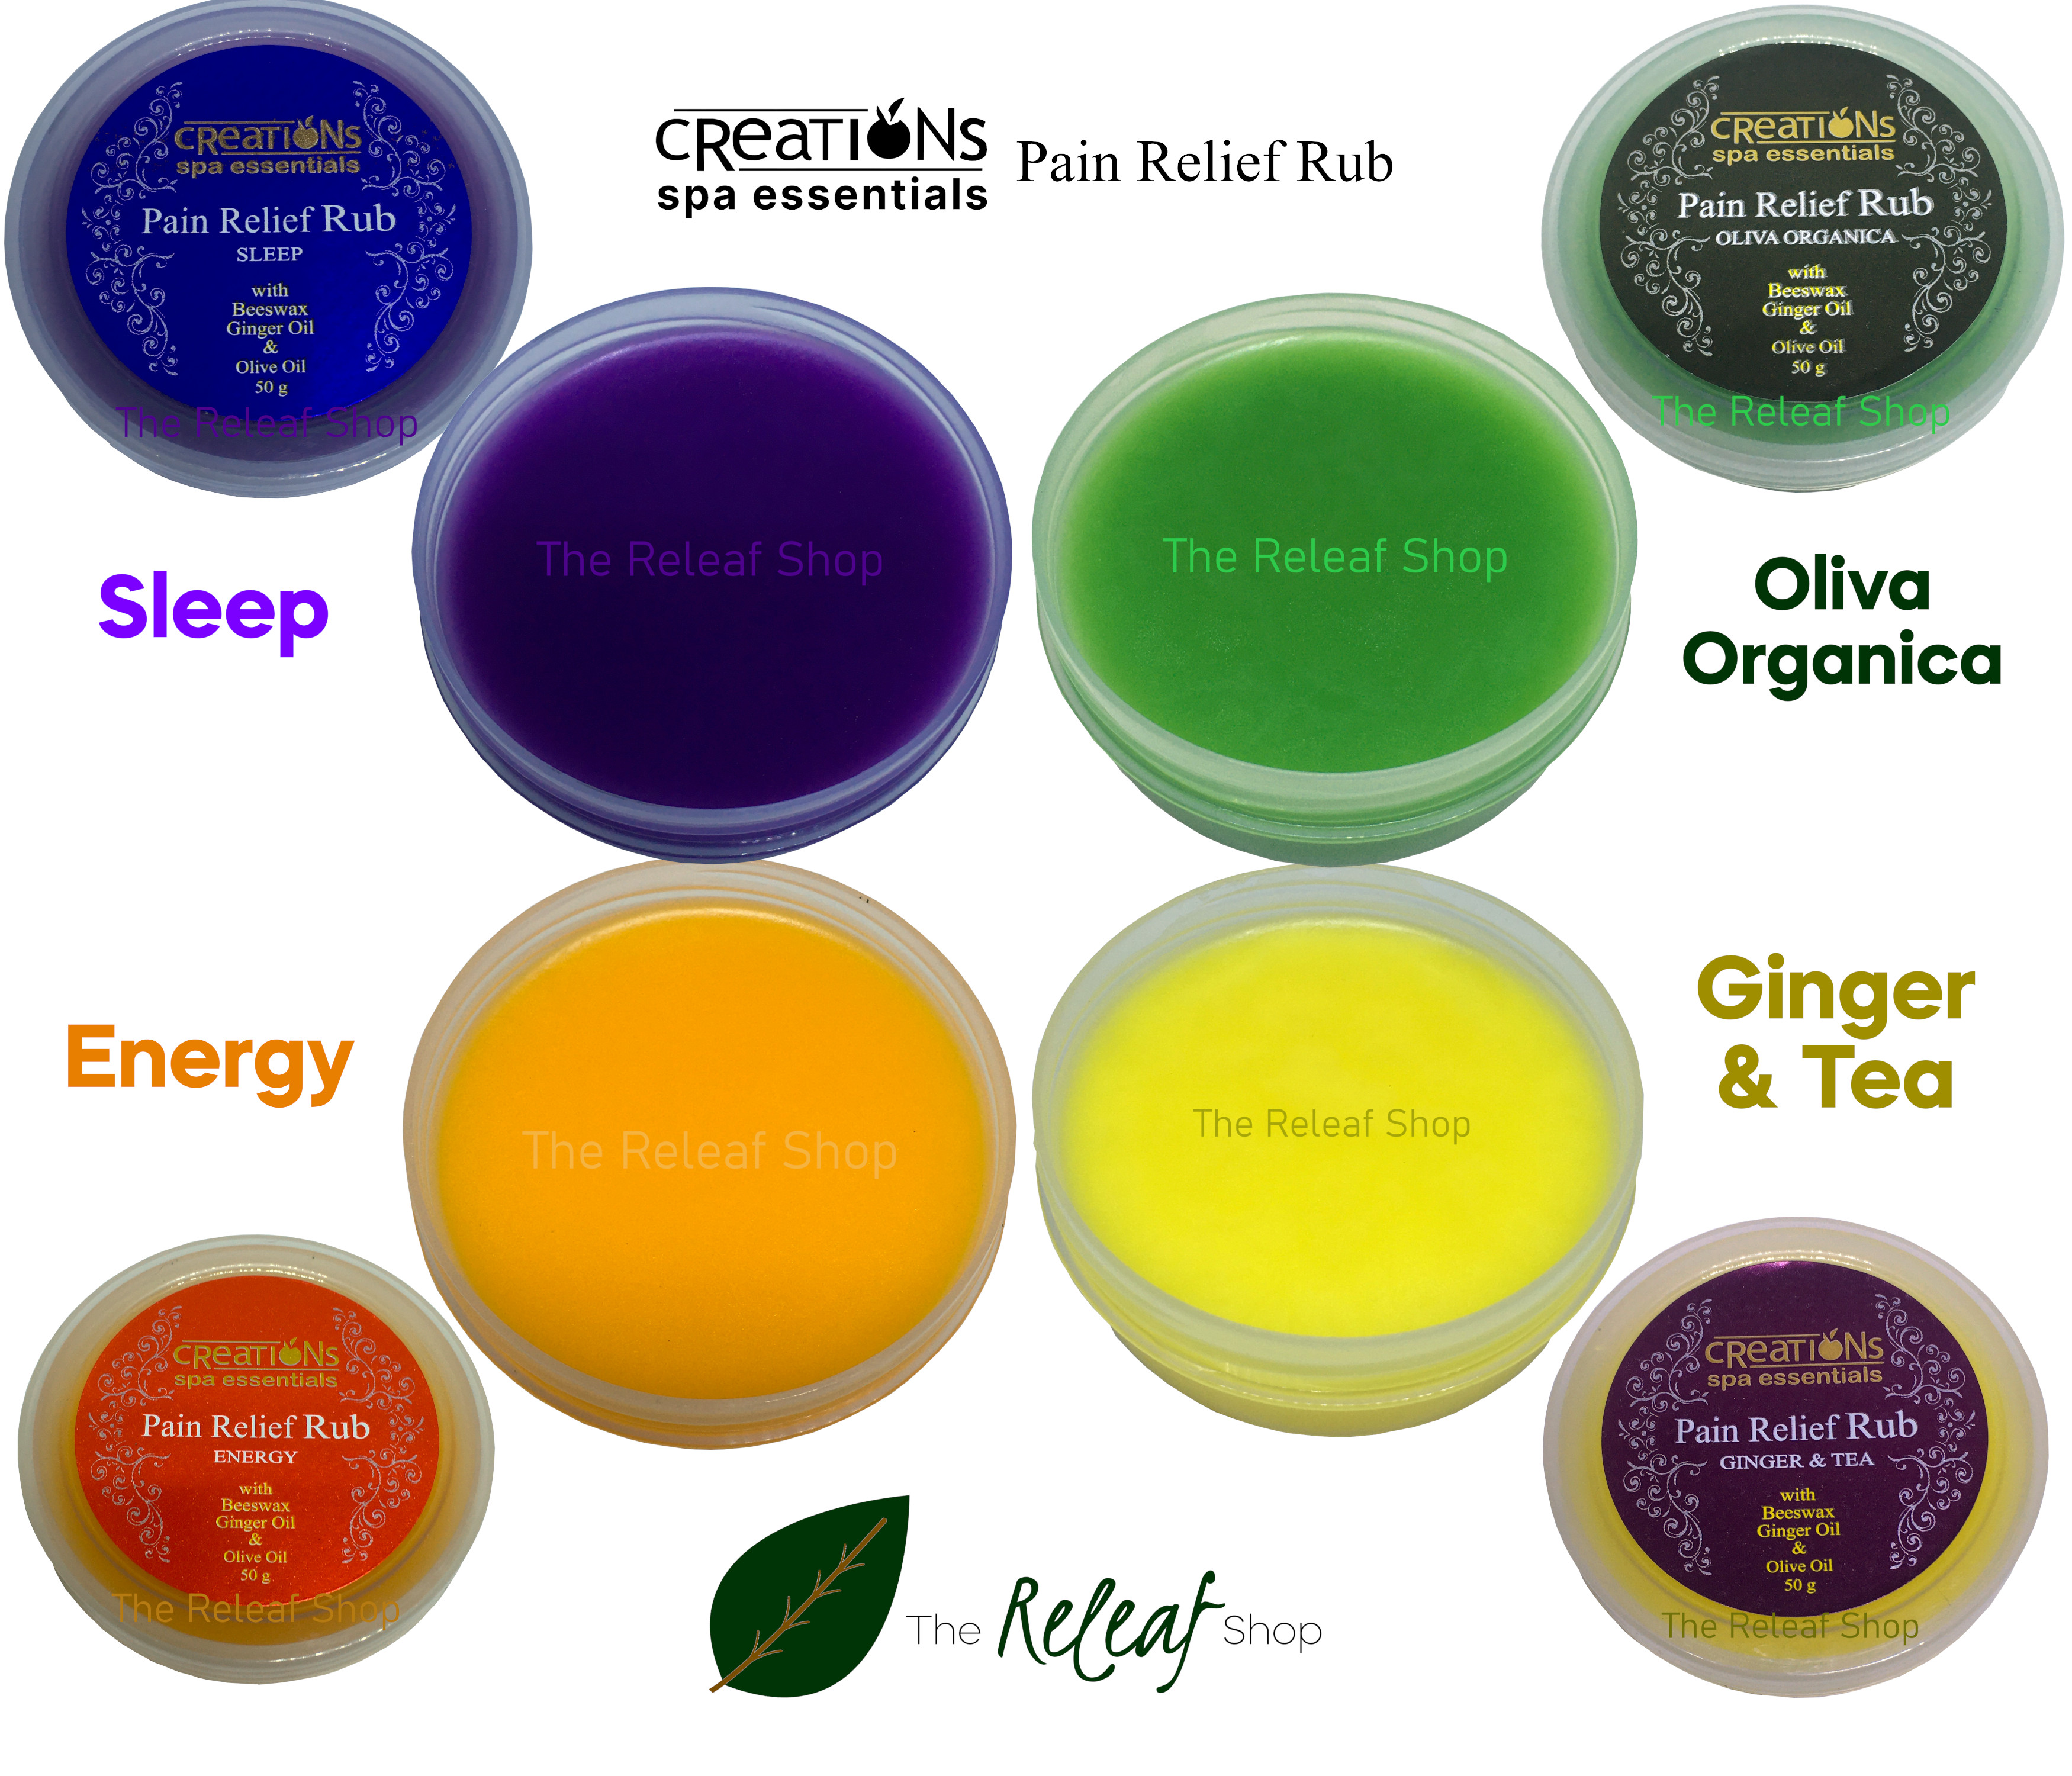 Creations Spa Essentials Pain Relief Rub - Sleep and Oliva